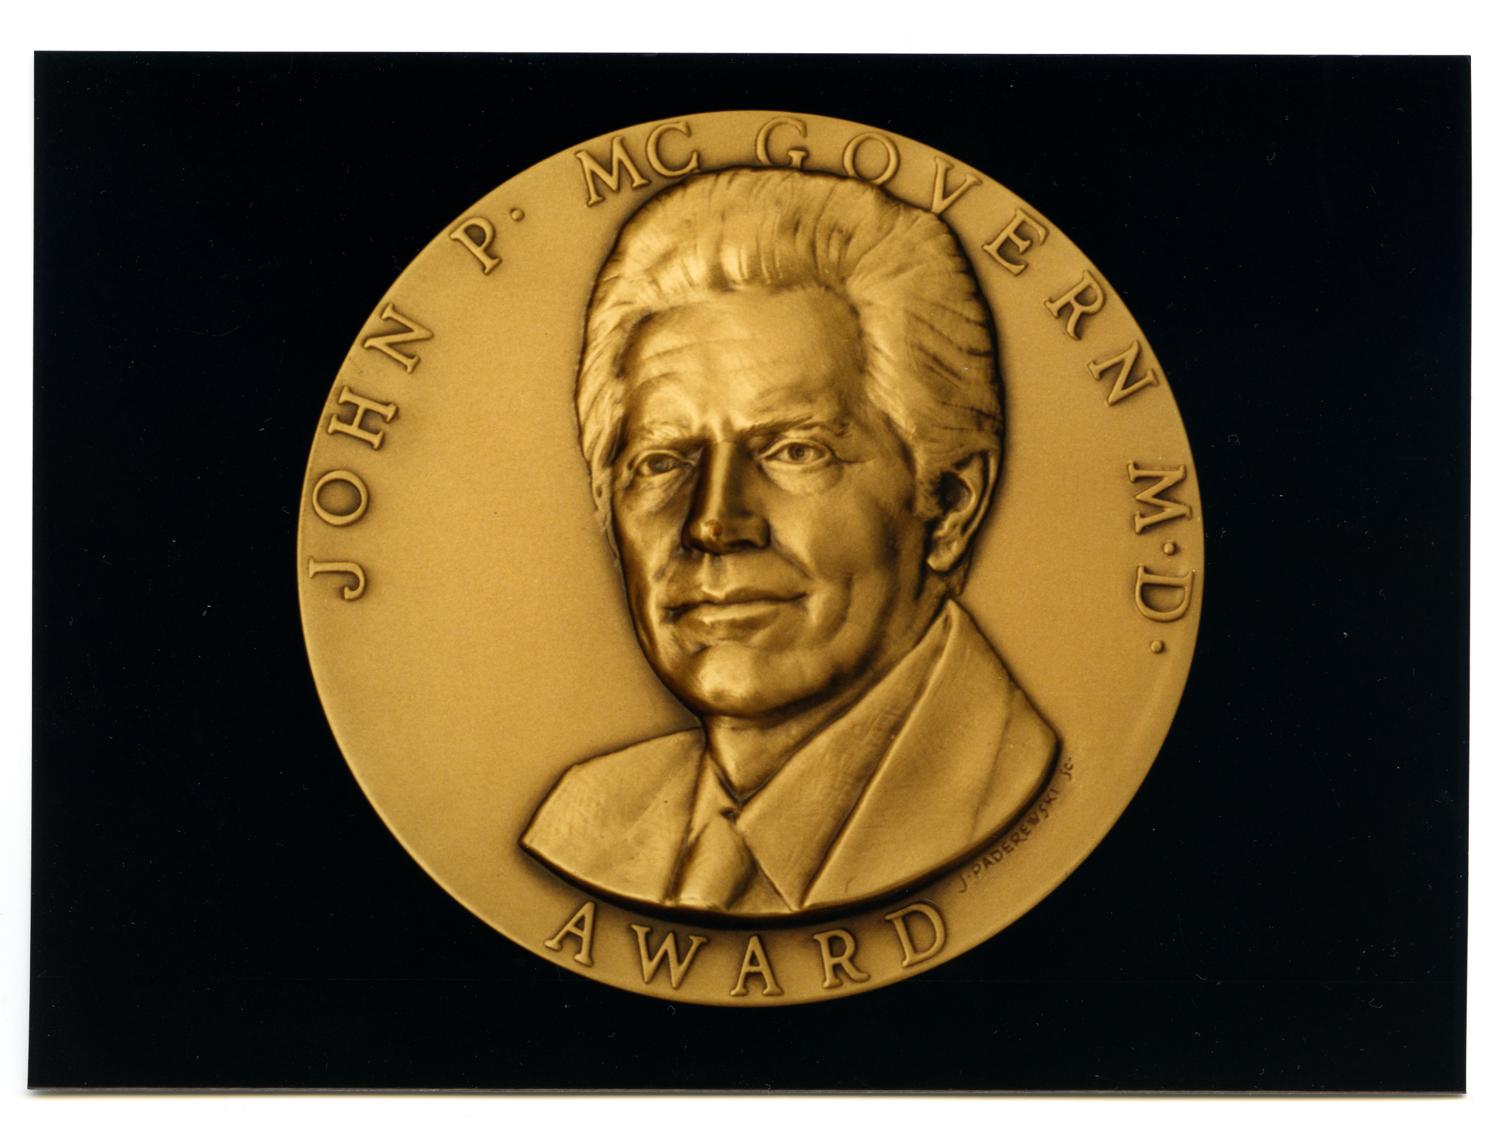 John P. McGovern, MD, medallion